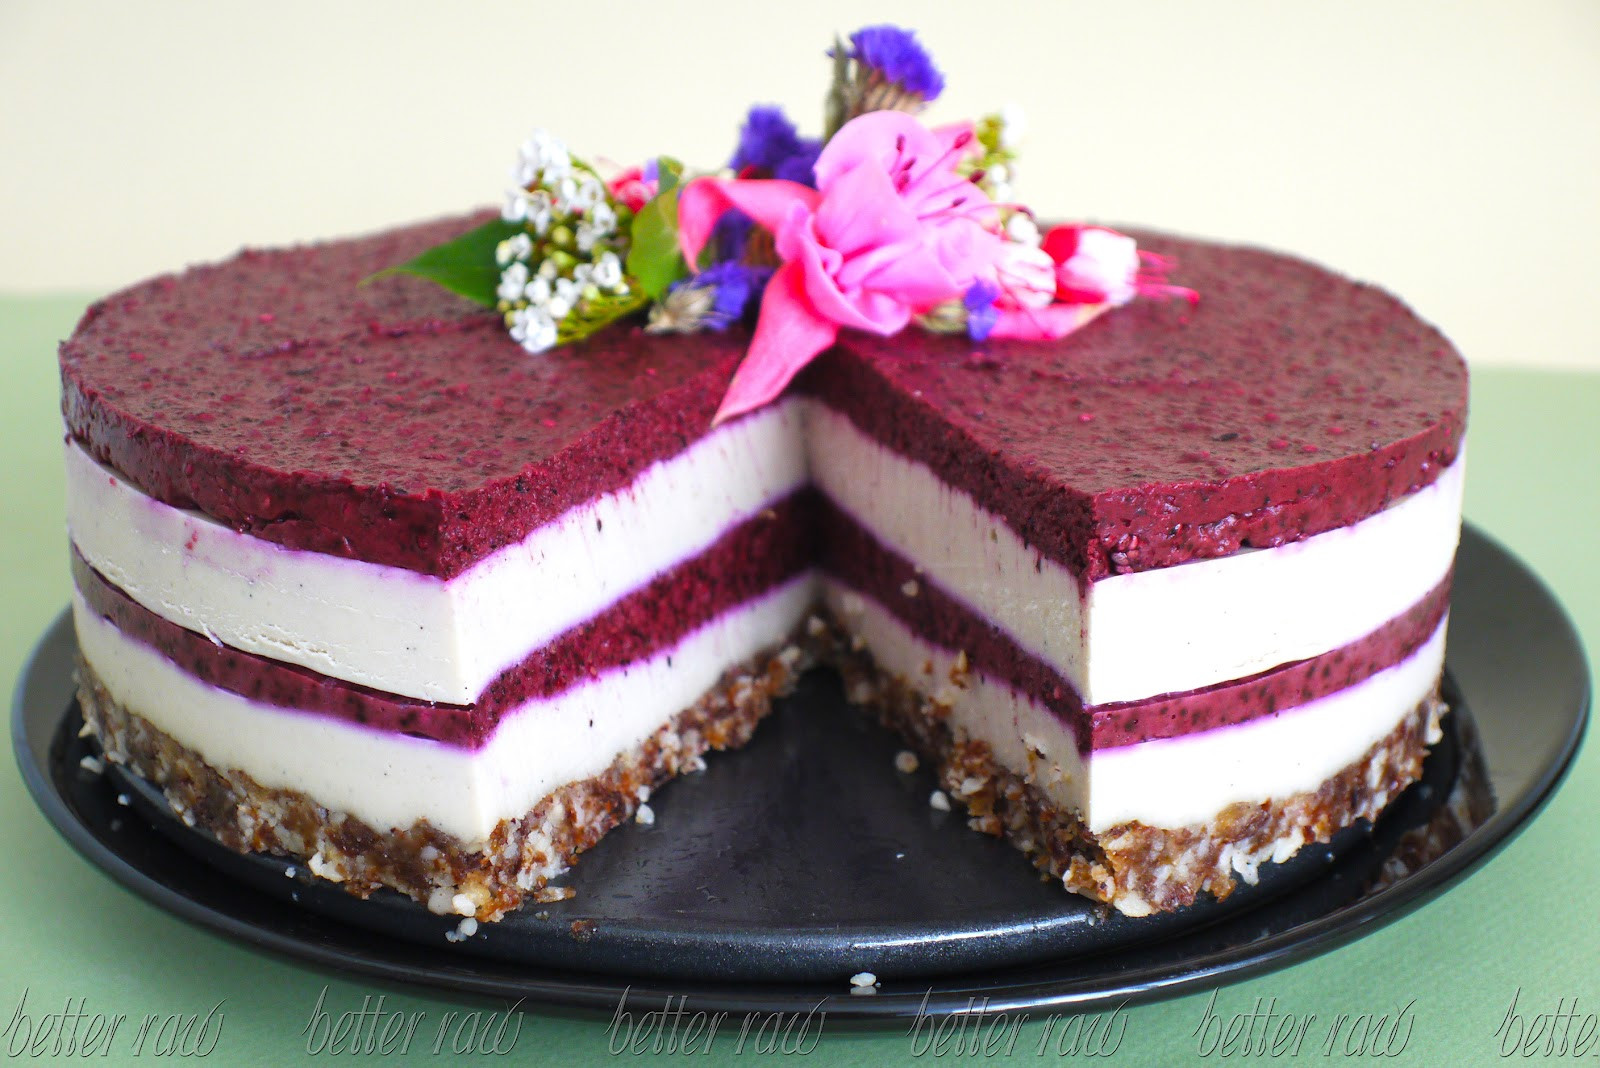 Blueberry Birthday Cake Recipe
 BLUEBERRY AND CREAM LAYER BIRTHDAY CAKE Better Raw